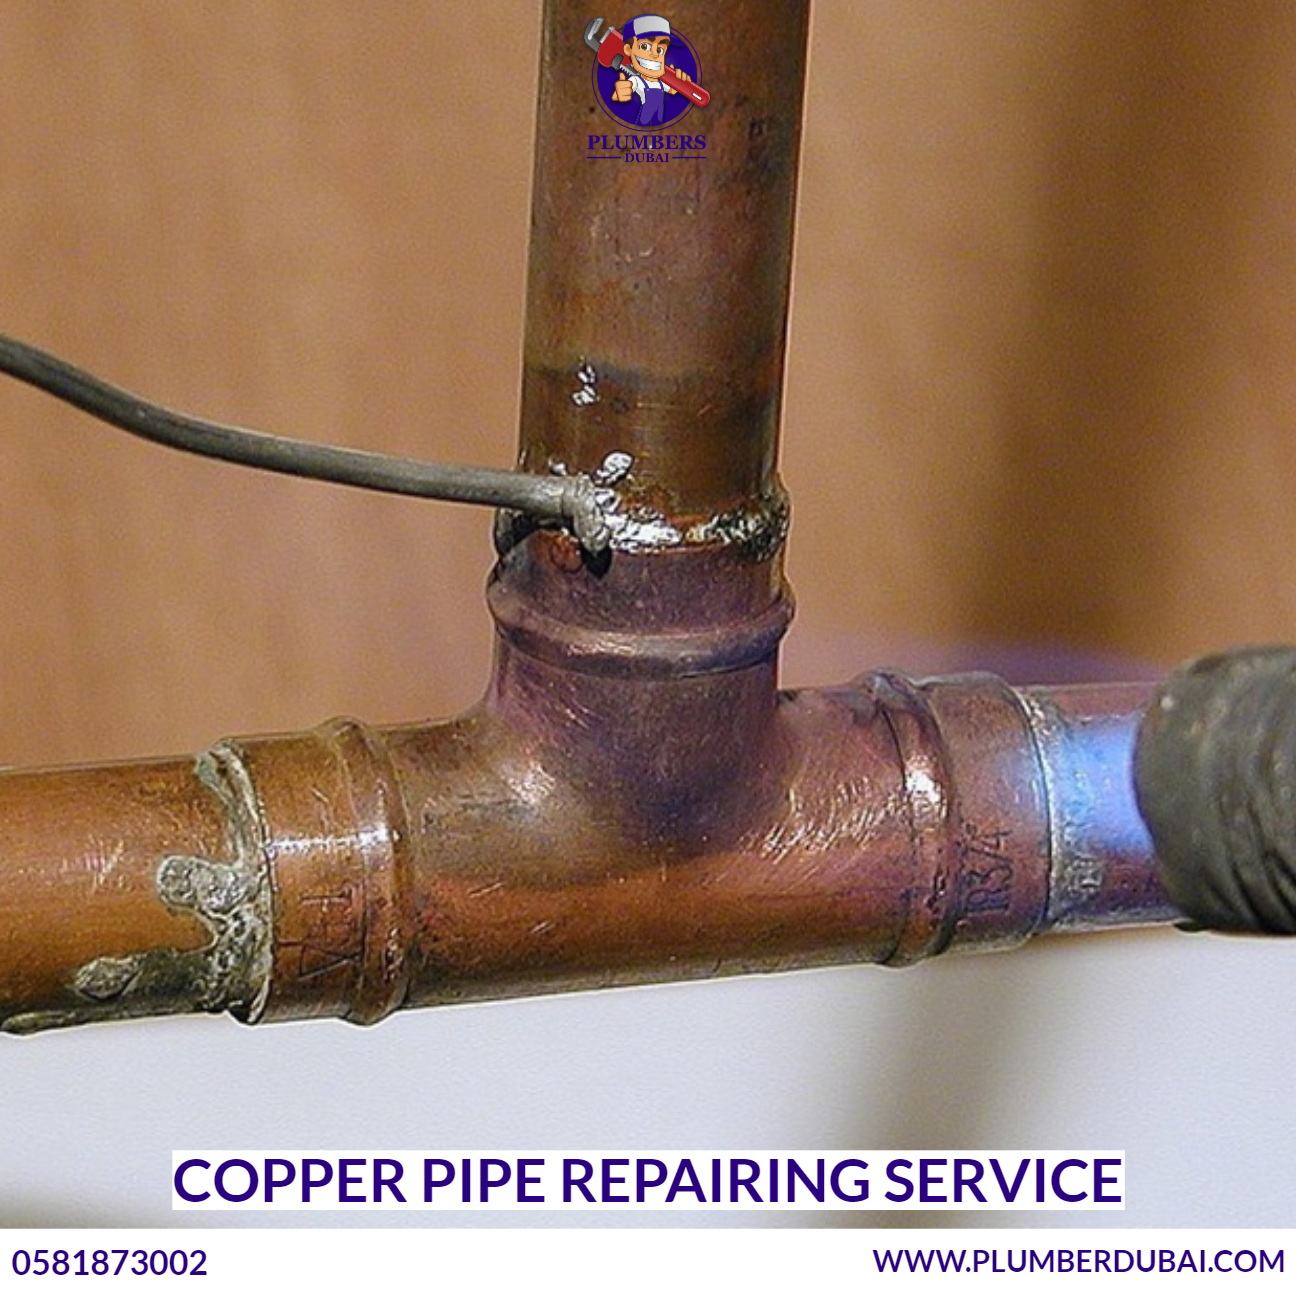 Copper Pipe Repairing Service